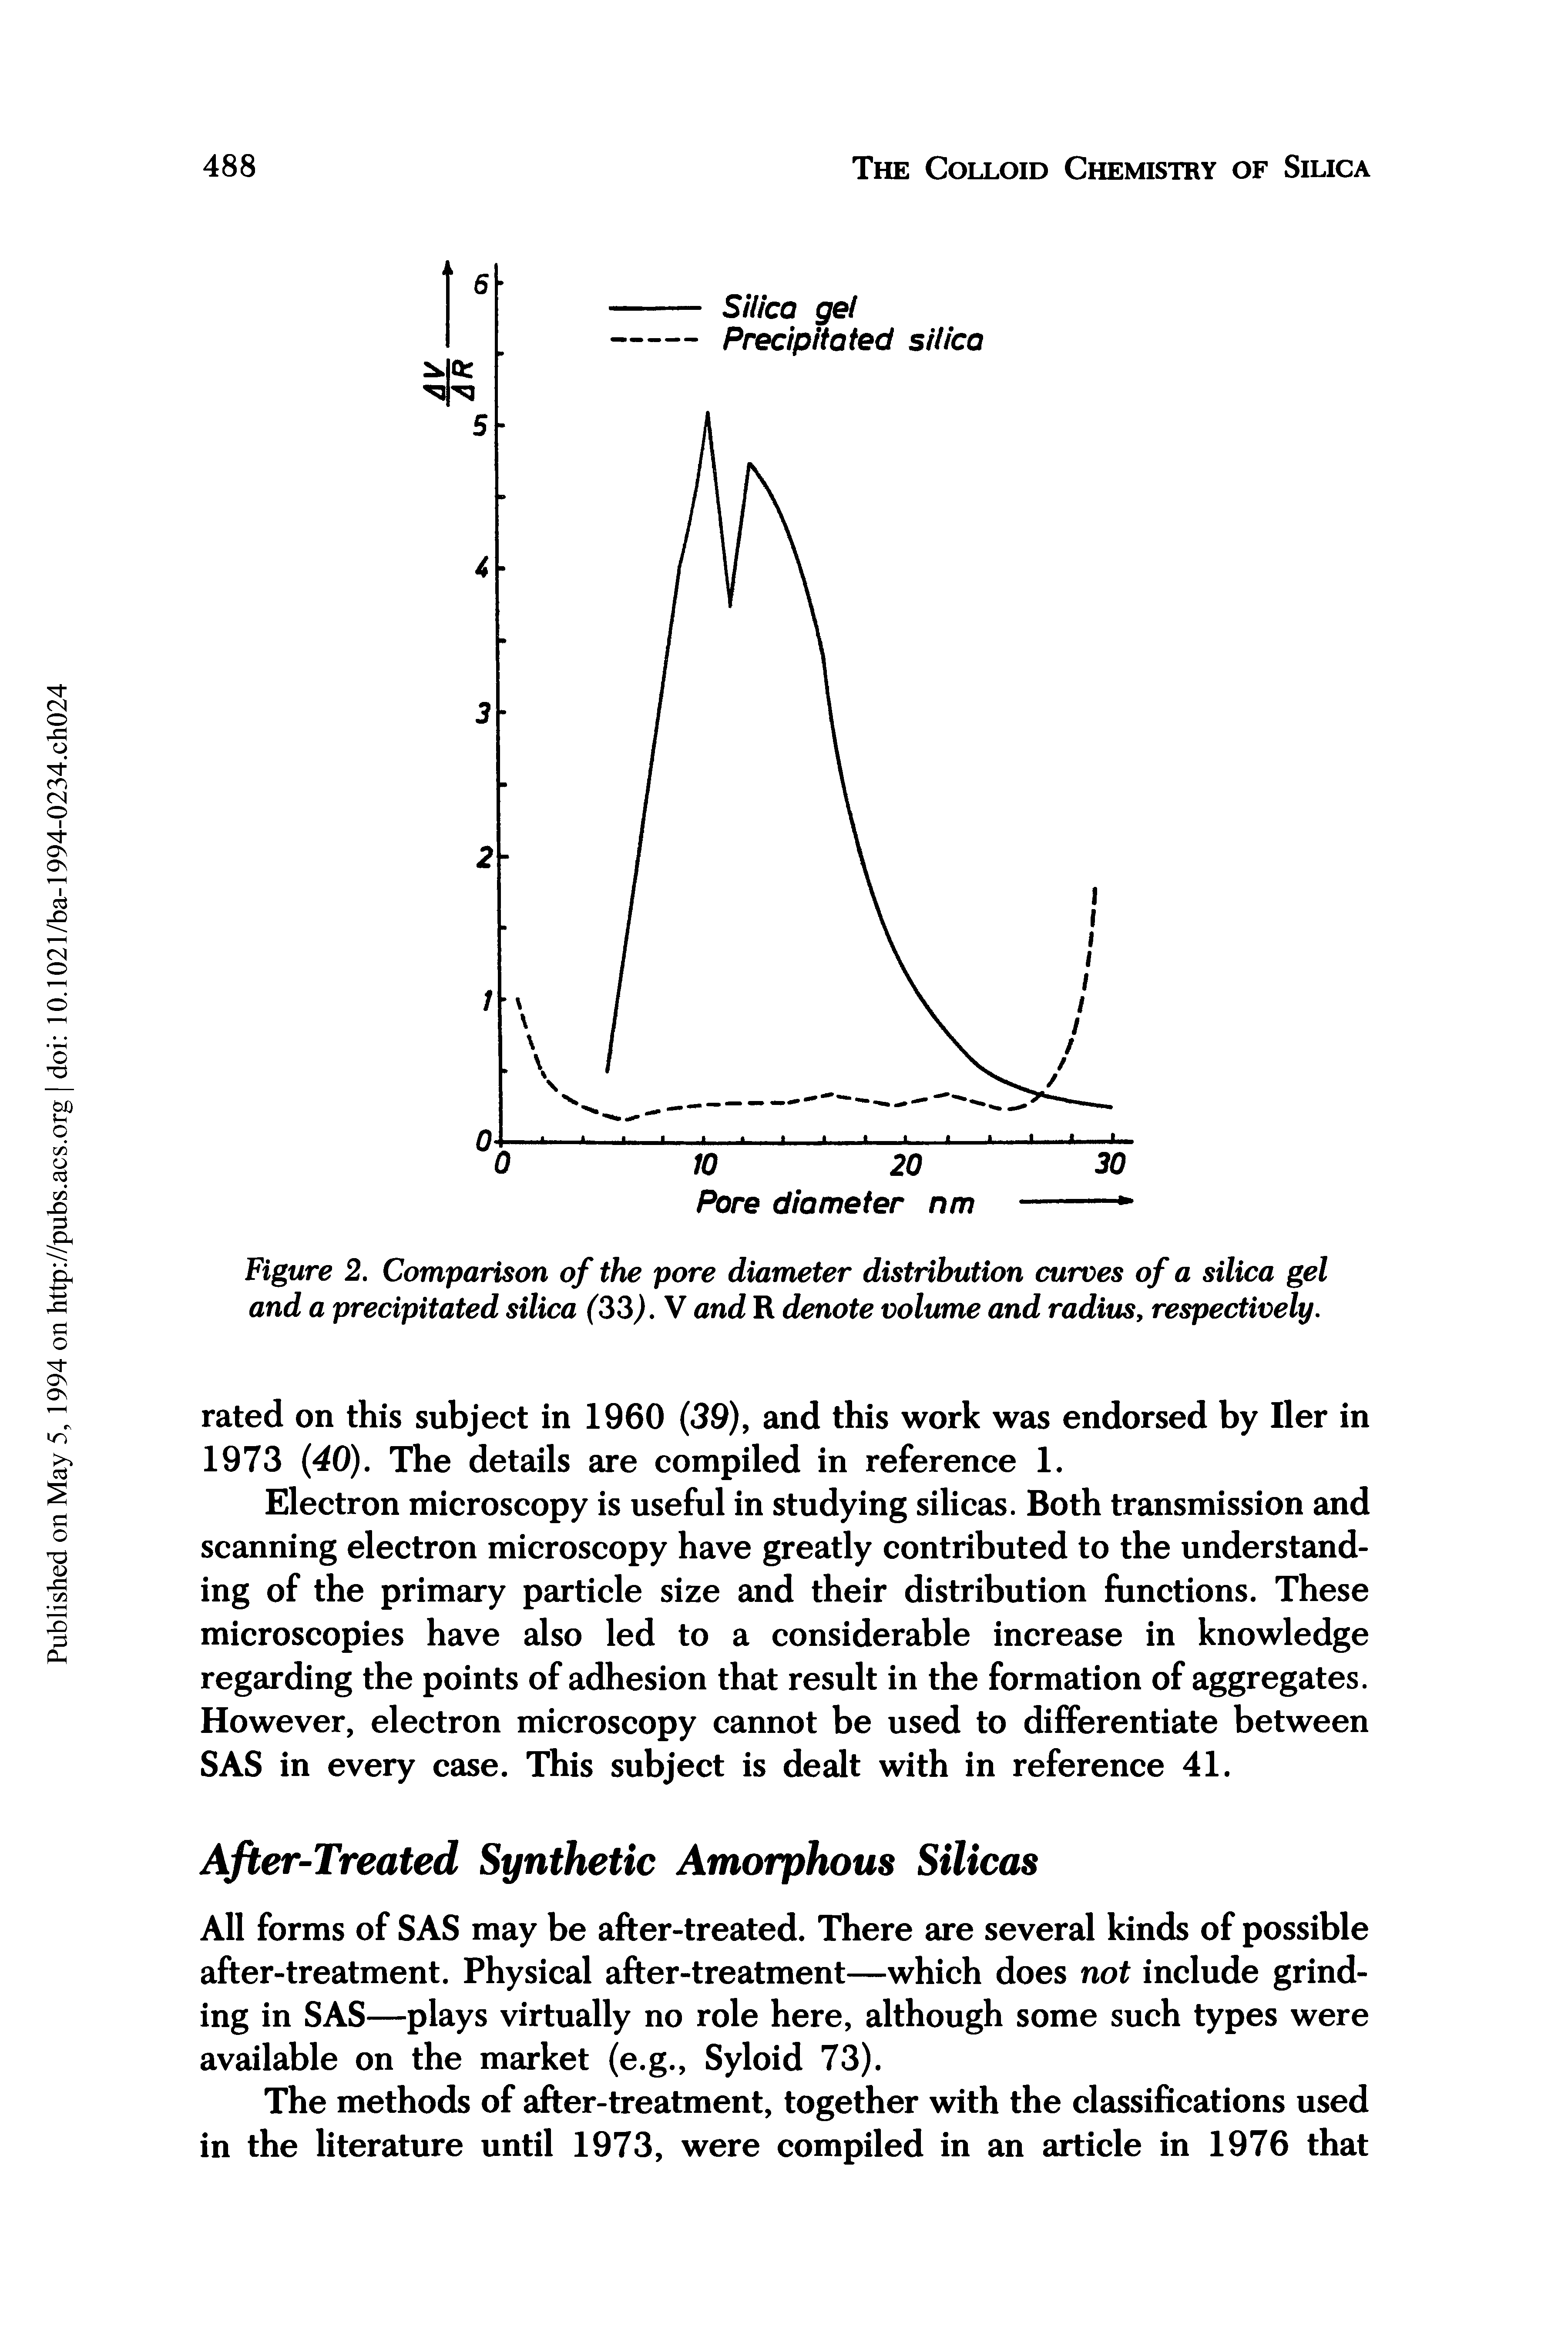 Figure 2. Comparison of the pore diameter distribution curves of a silica gel and a precipitated silica (33). V and R denote volume and radius, respectively.